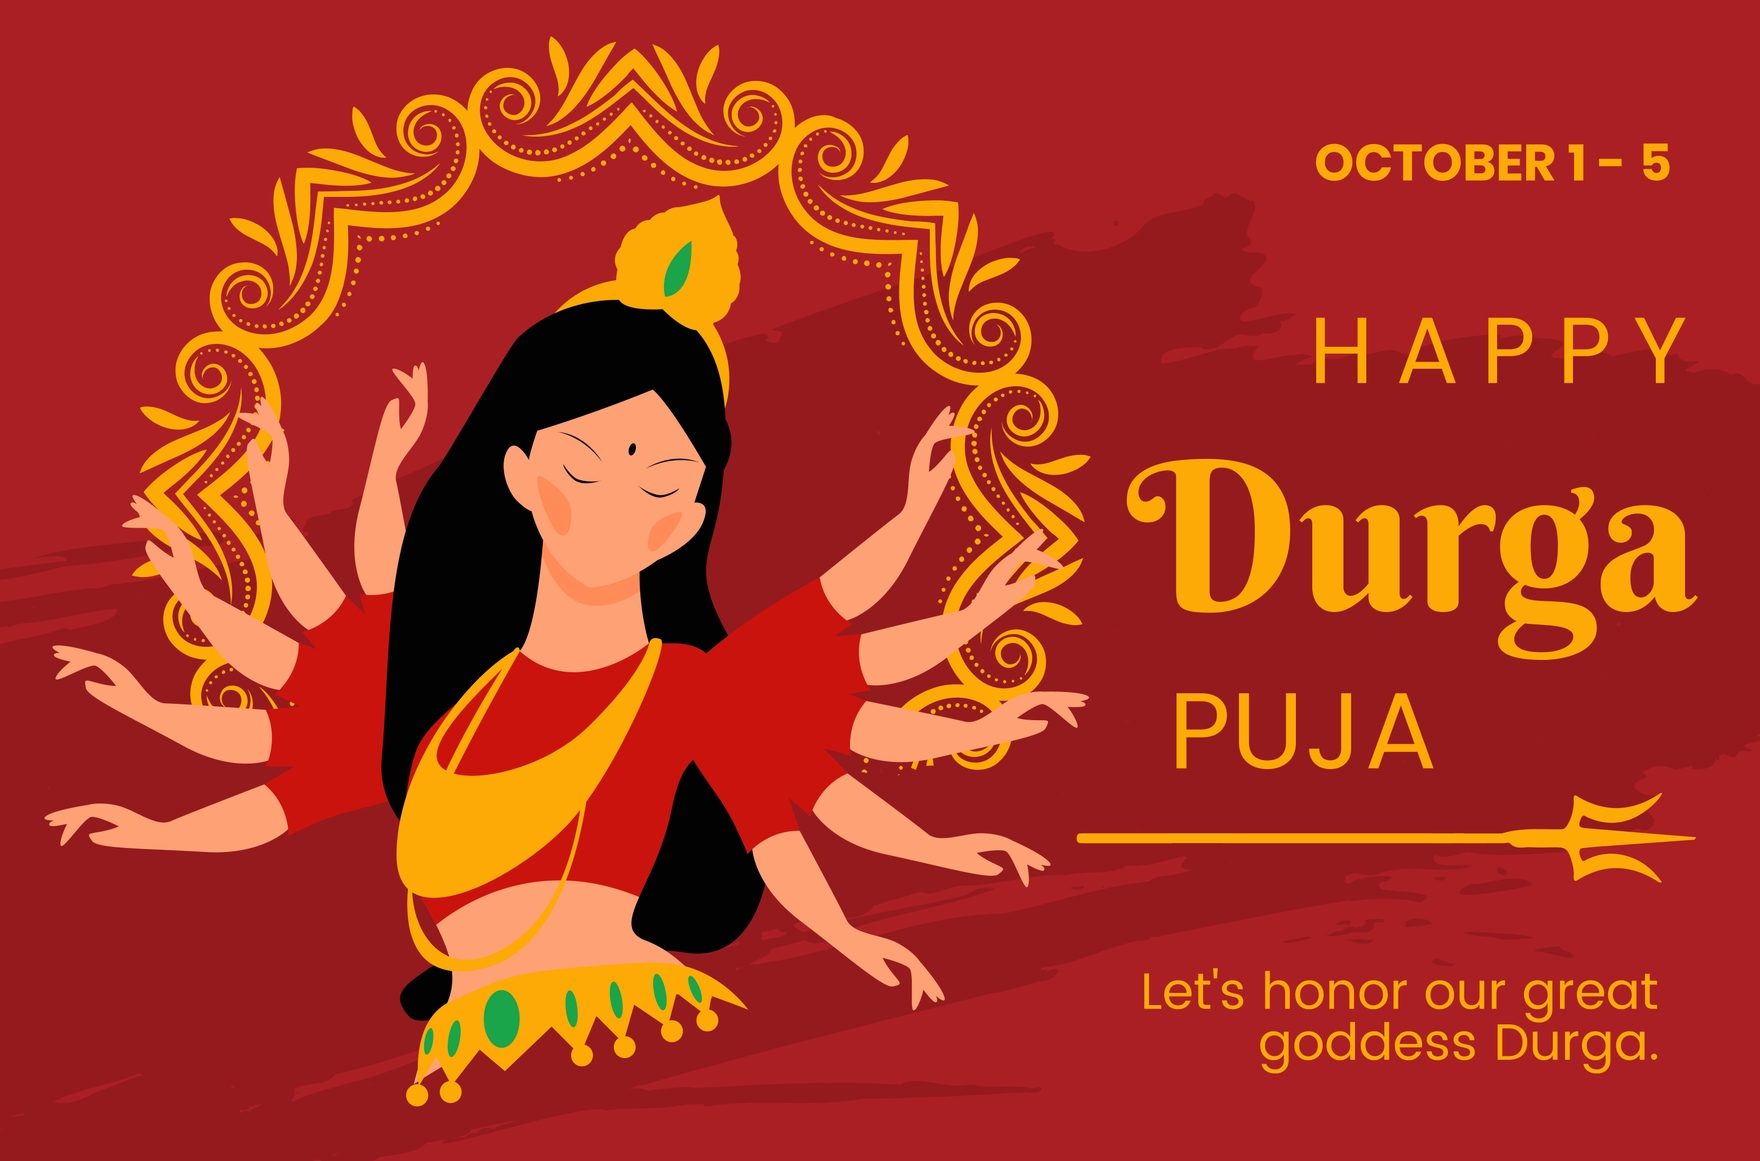 Happy Durga Puja Banner